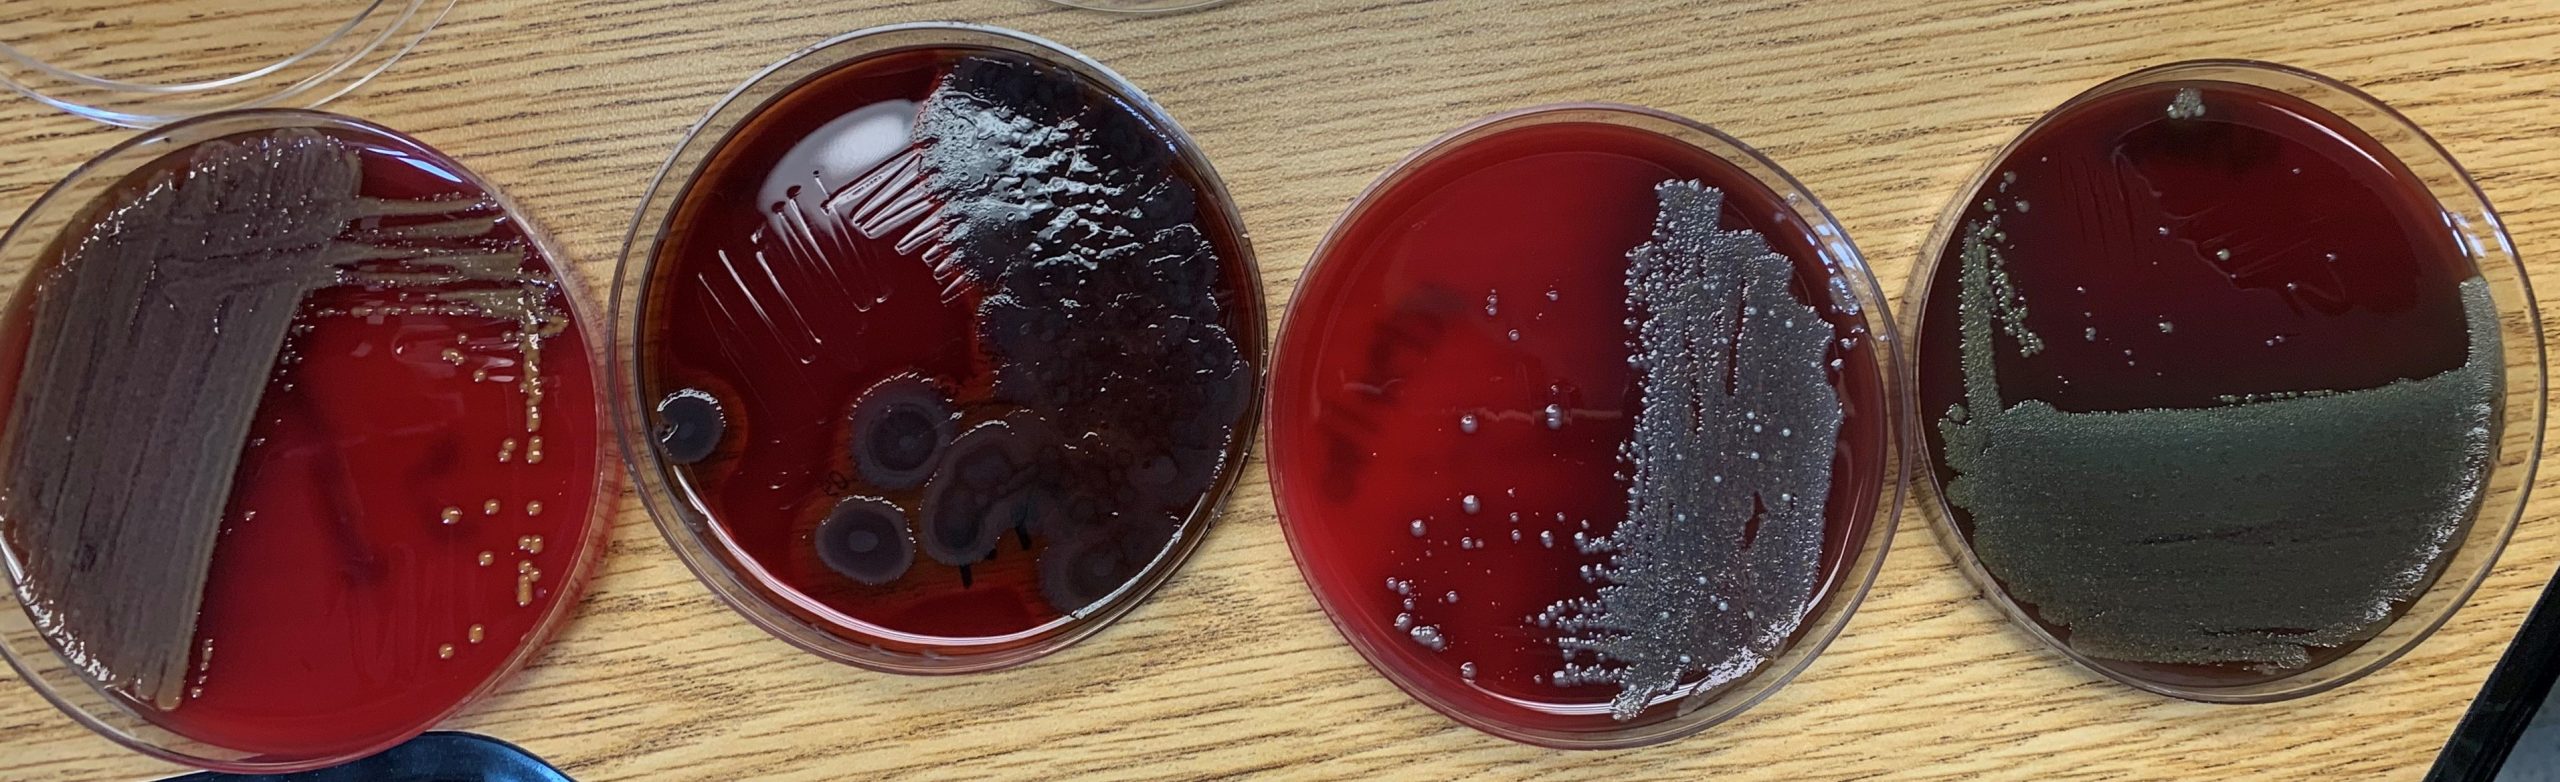 Blood Agar Plates Growing Culture